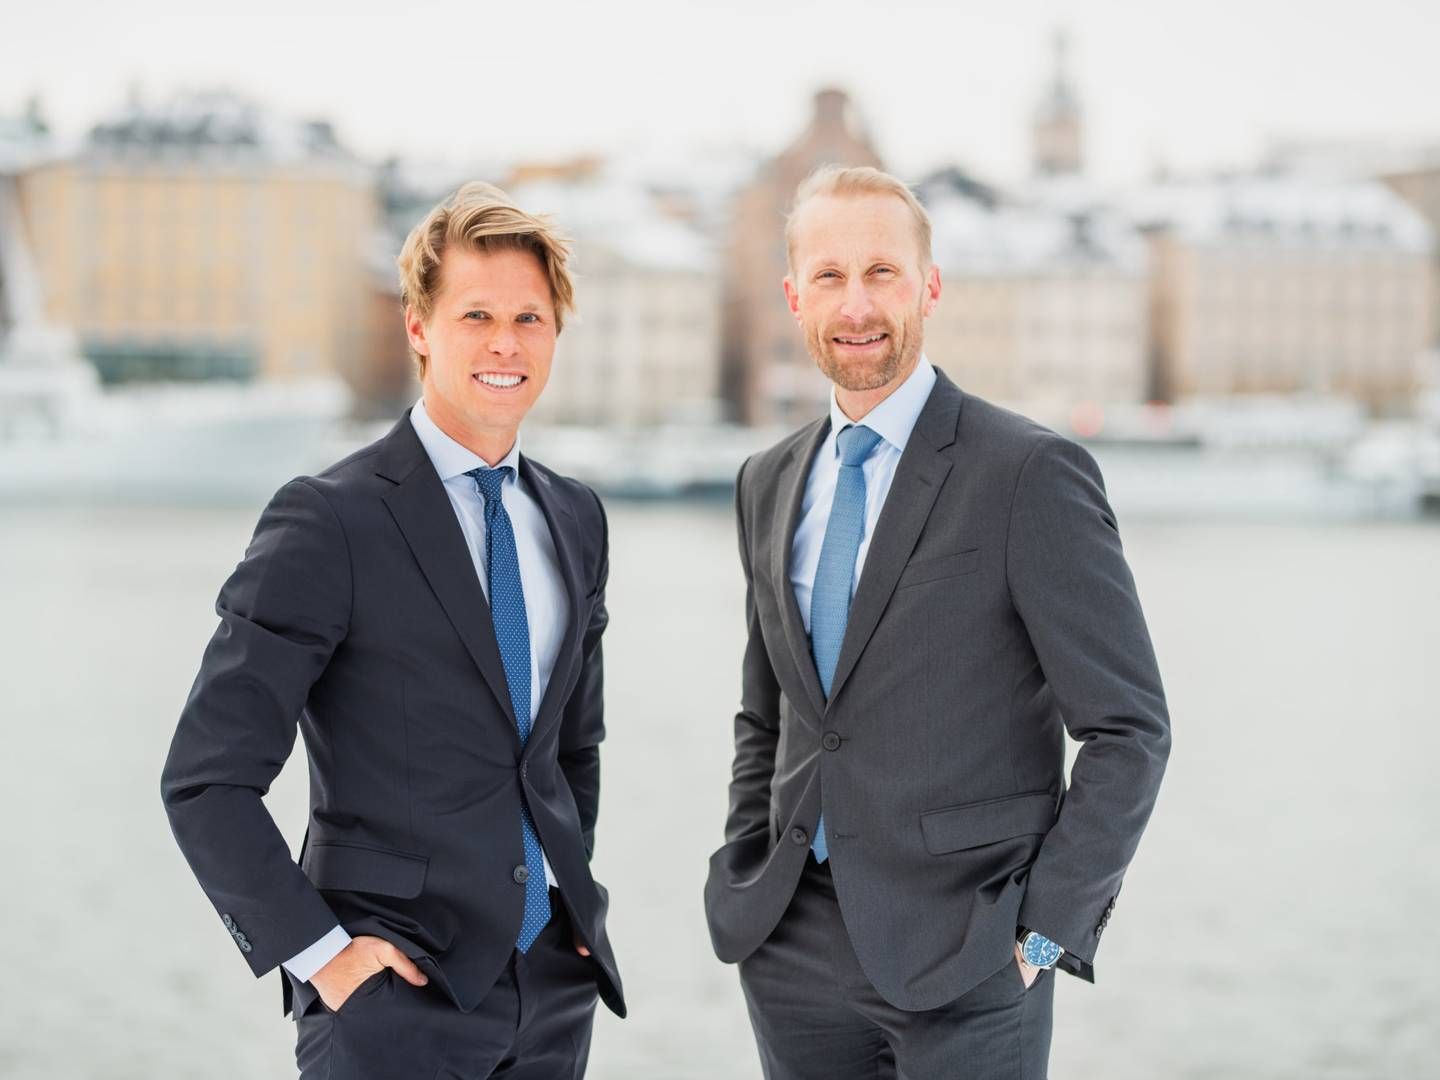 Carl Armfelt and Erik Sprinchorn, managers of Tin New Technology. | Photo: Tin Fonder